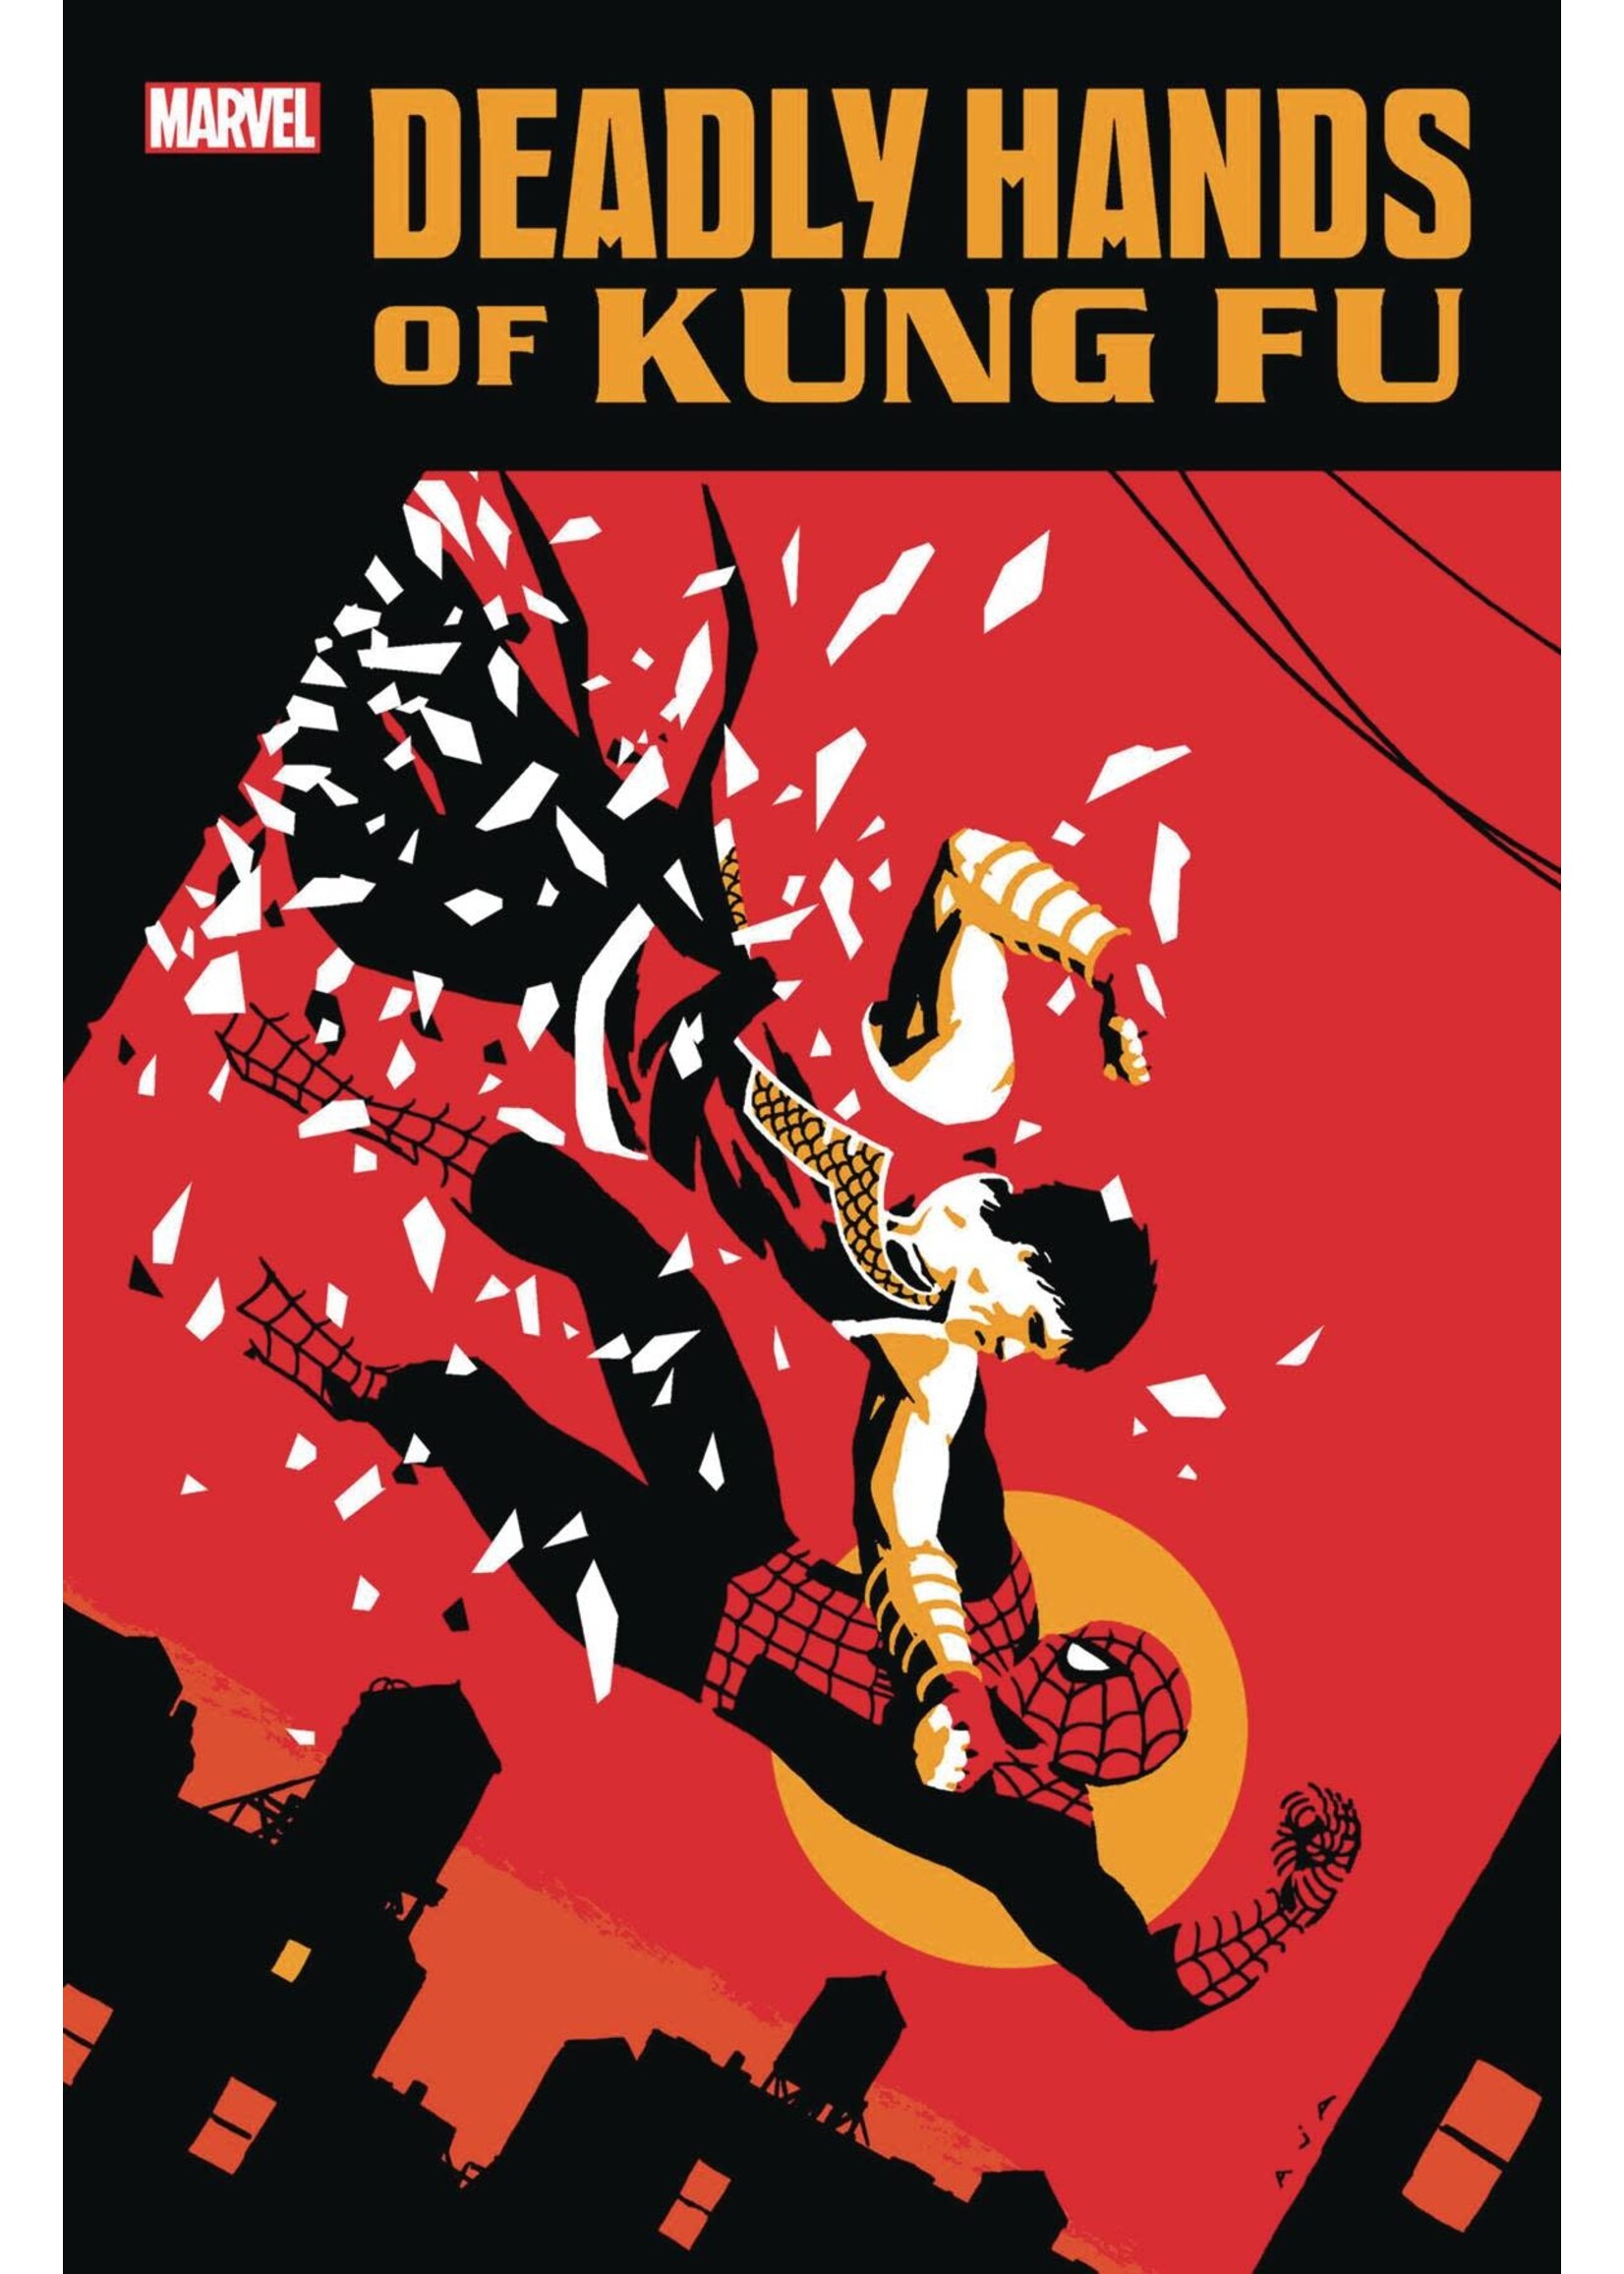 MARVEL COMICS DEADLY HANDS OF KUNG FU GANG WAR #3 [GW]